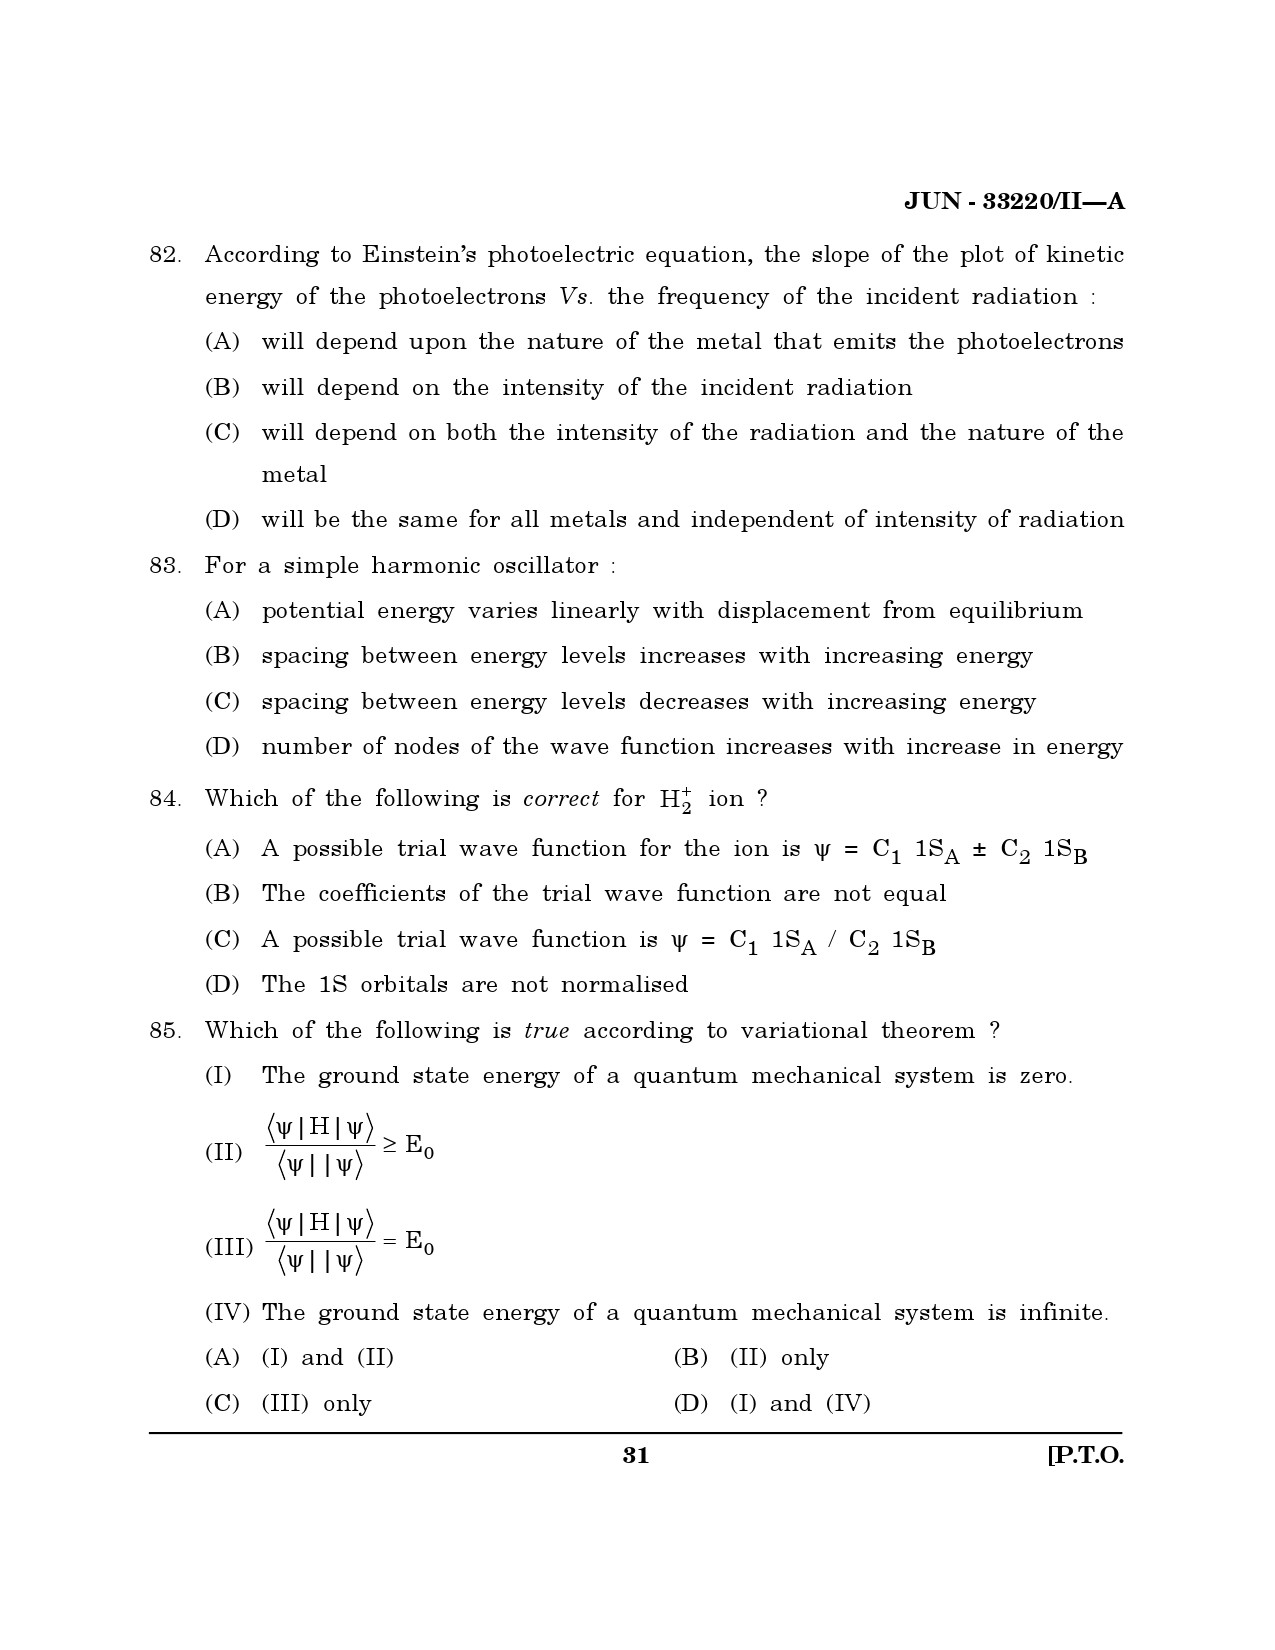 Maharashtra SET Chemical Sciences Question Paper II June 2020 30